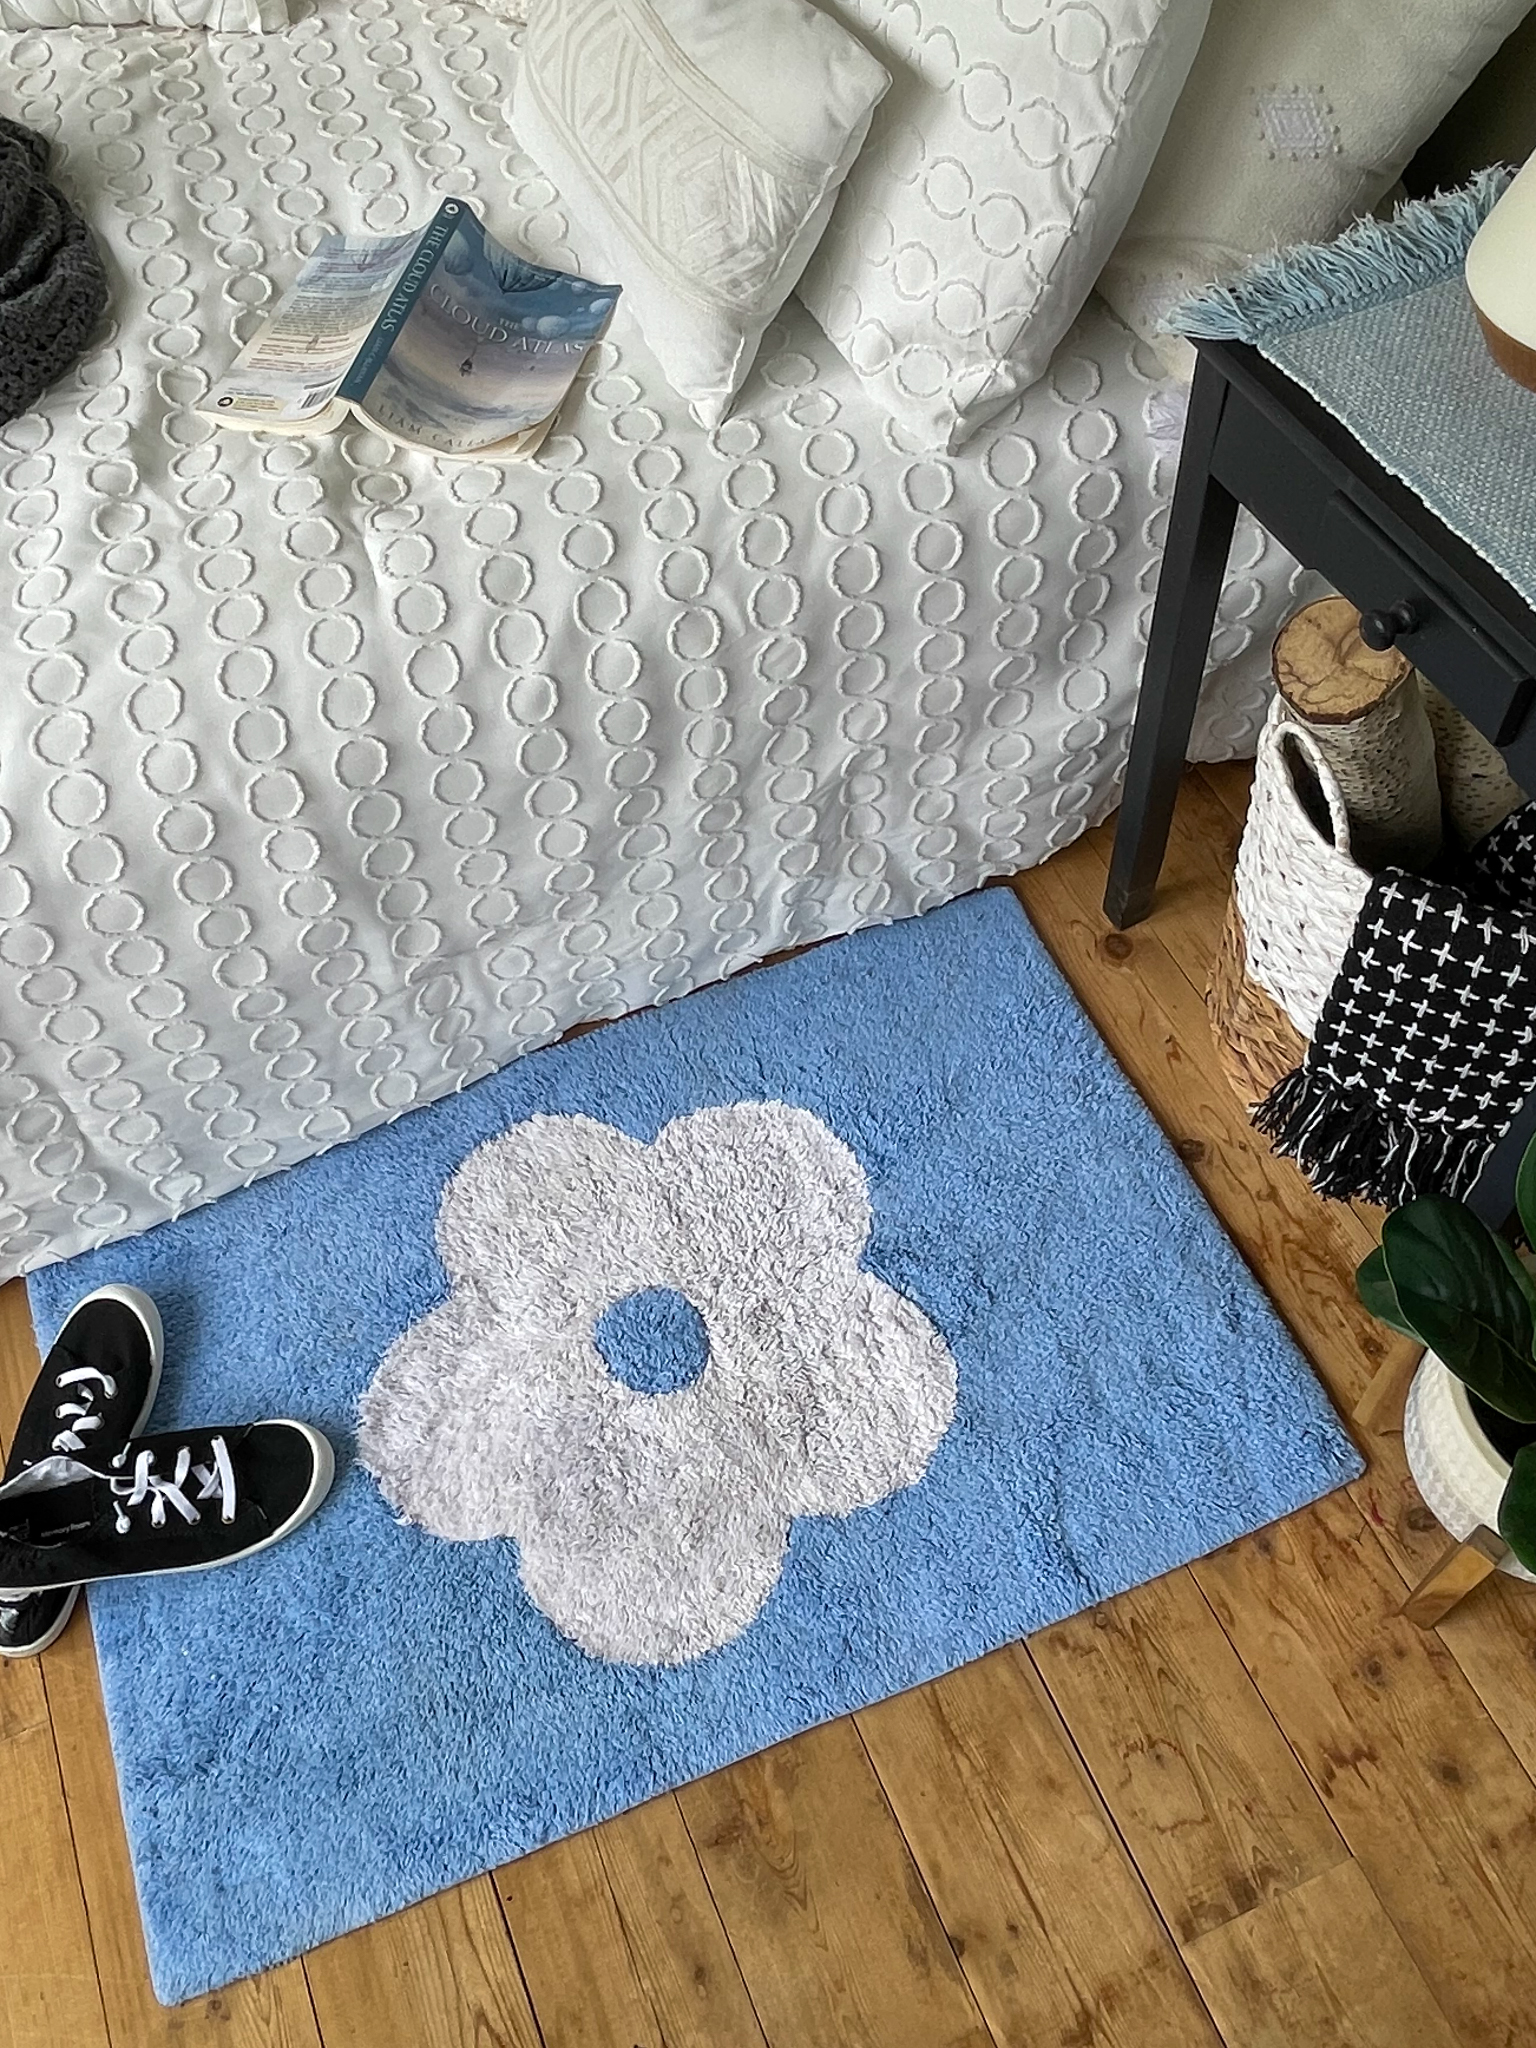 Carpet Samples and Gorilla tape area rug.